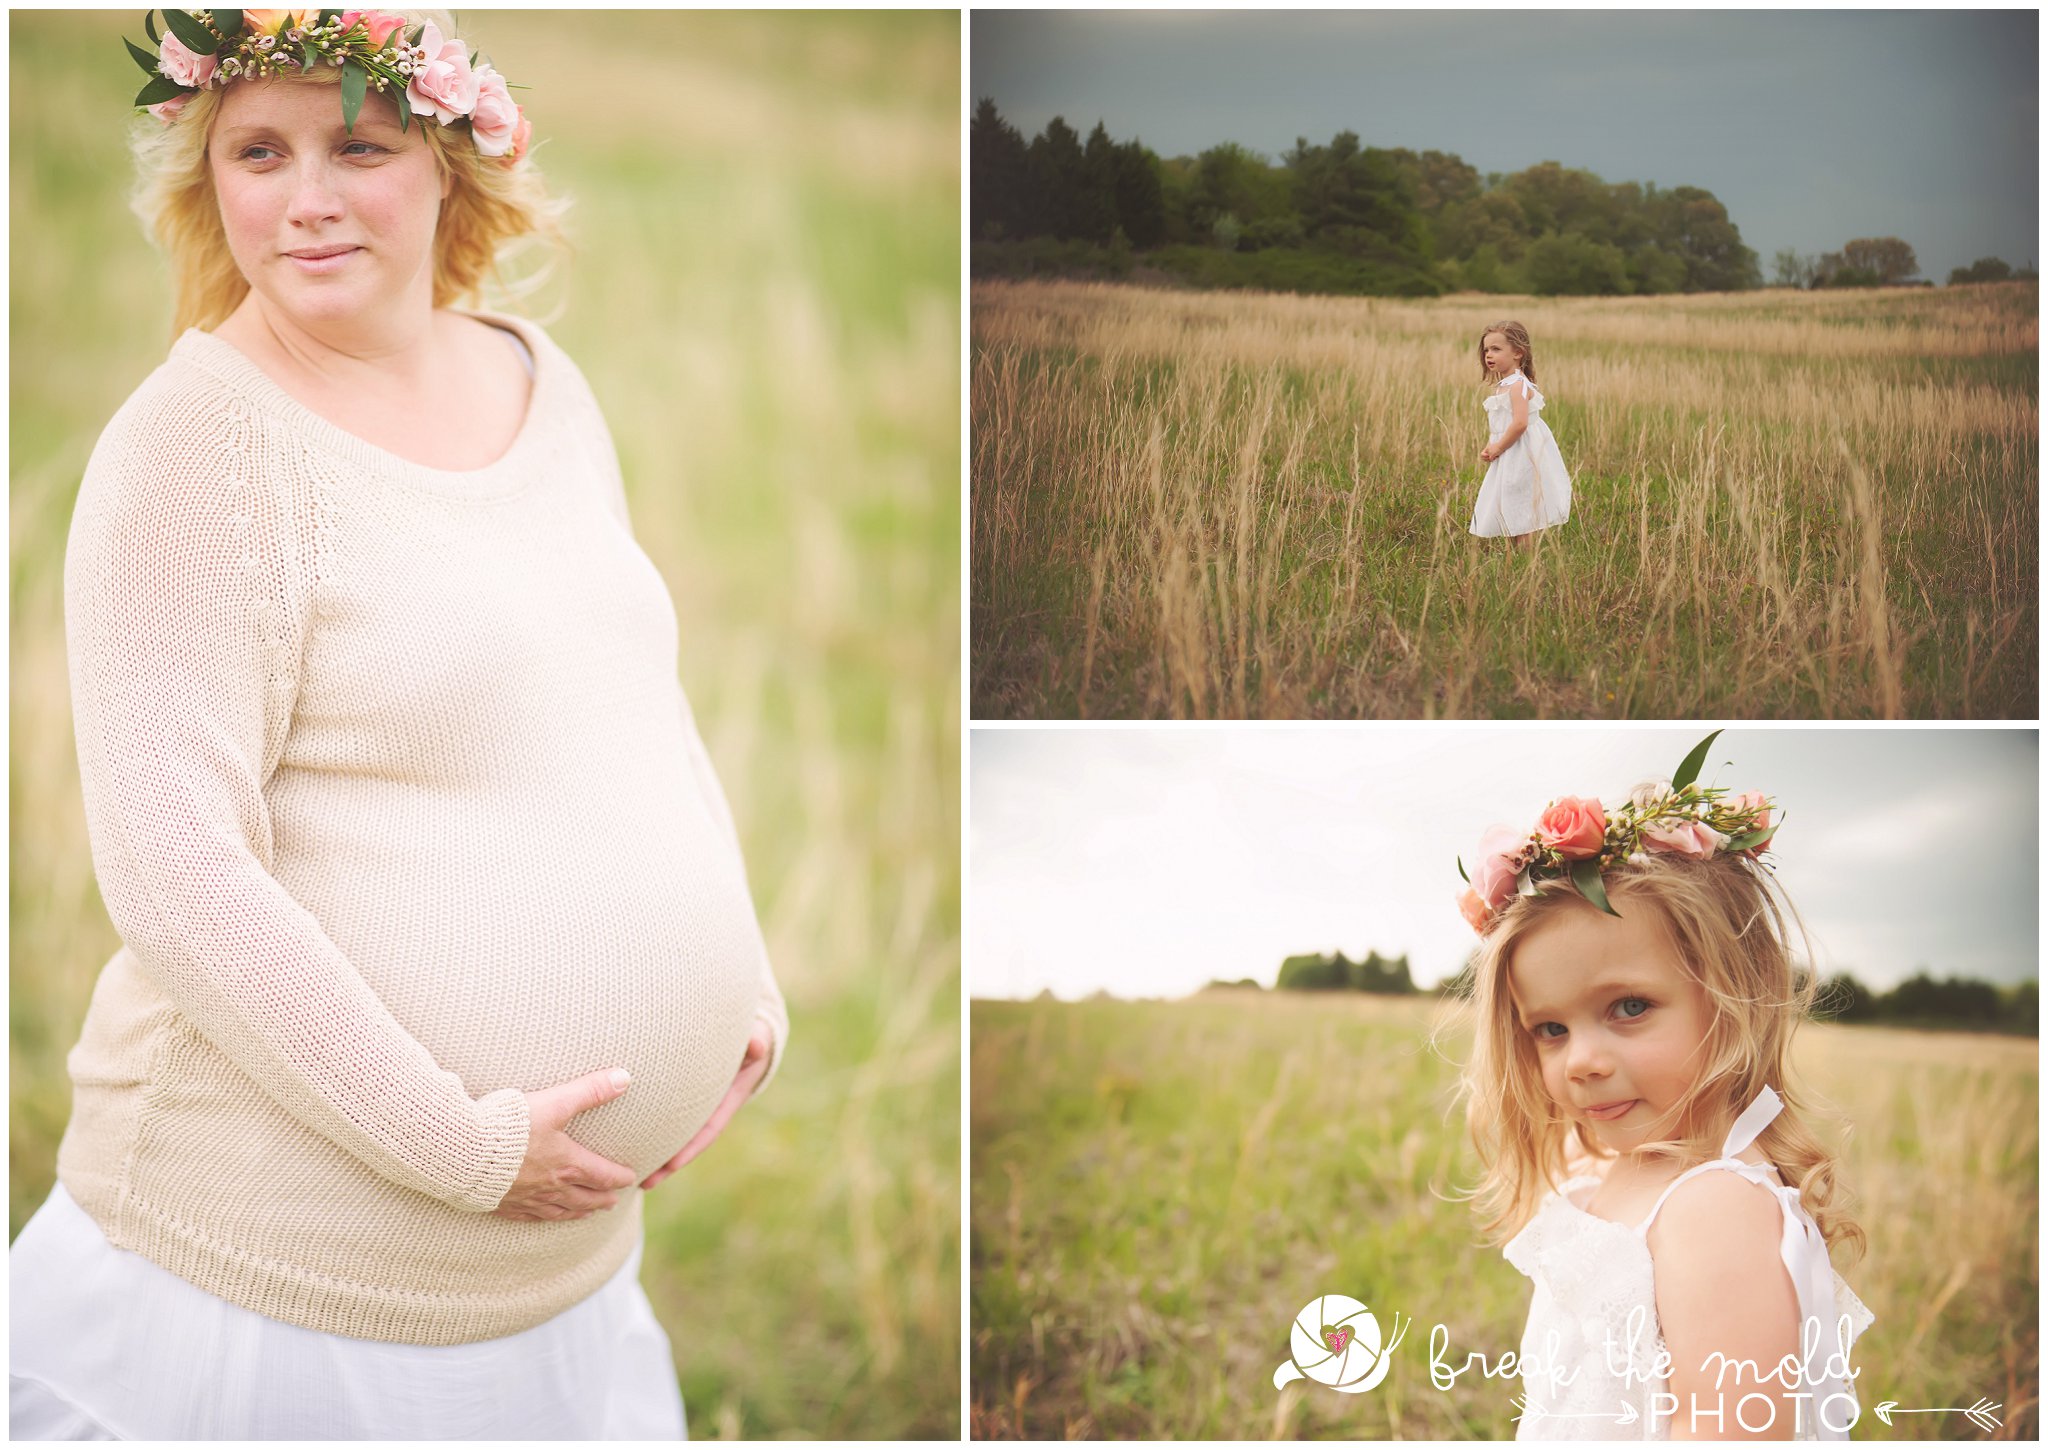 break-the-mold-photo-maternity-field-mommy-me-flower-floral-crown_2168.jpg